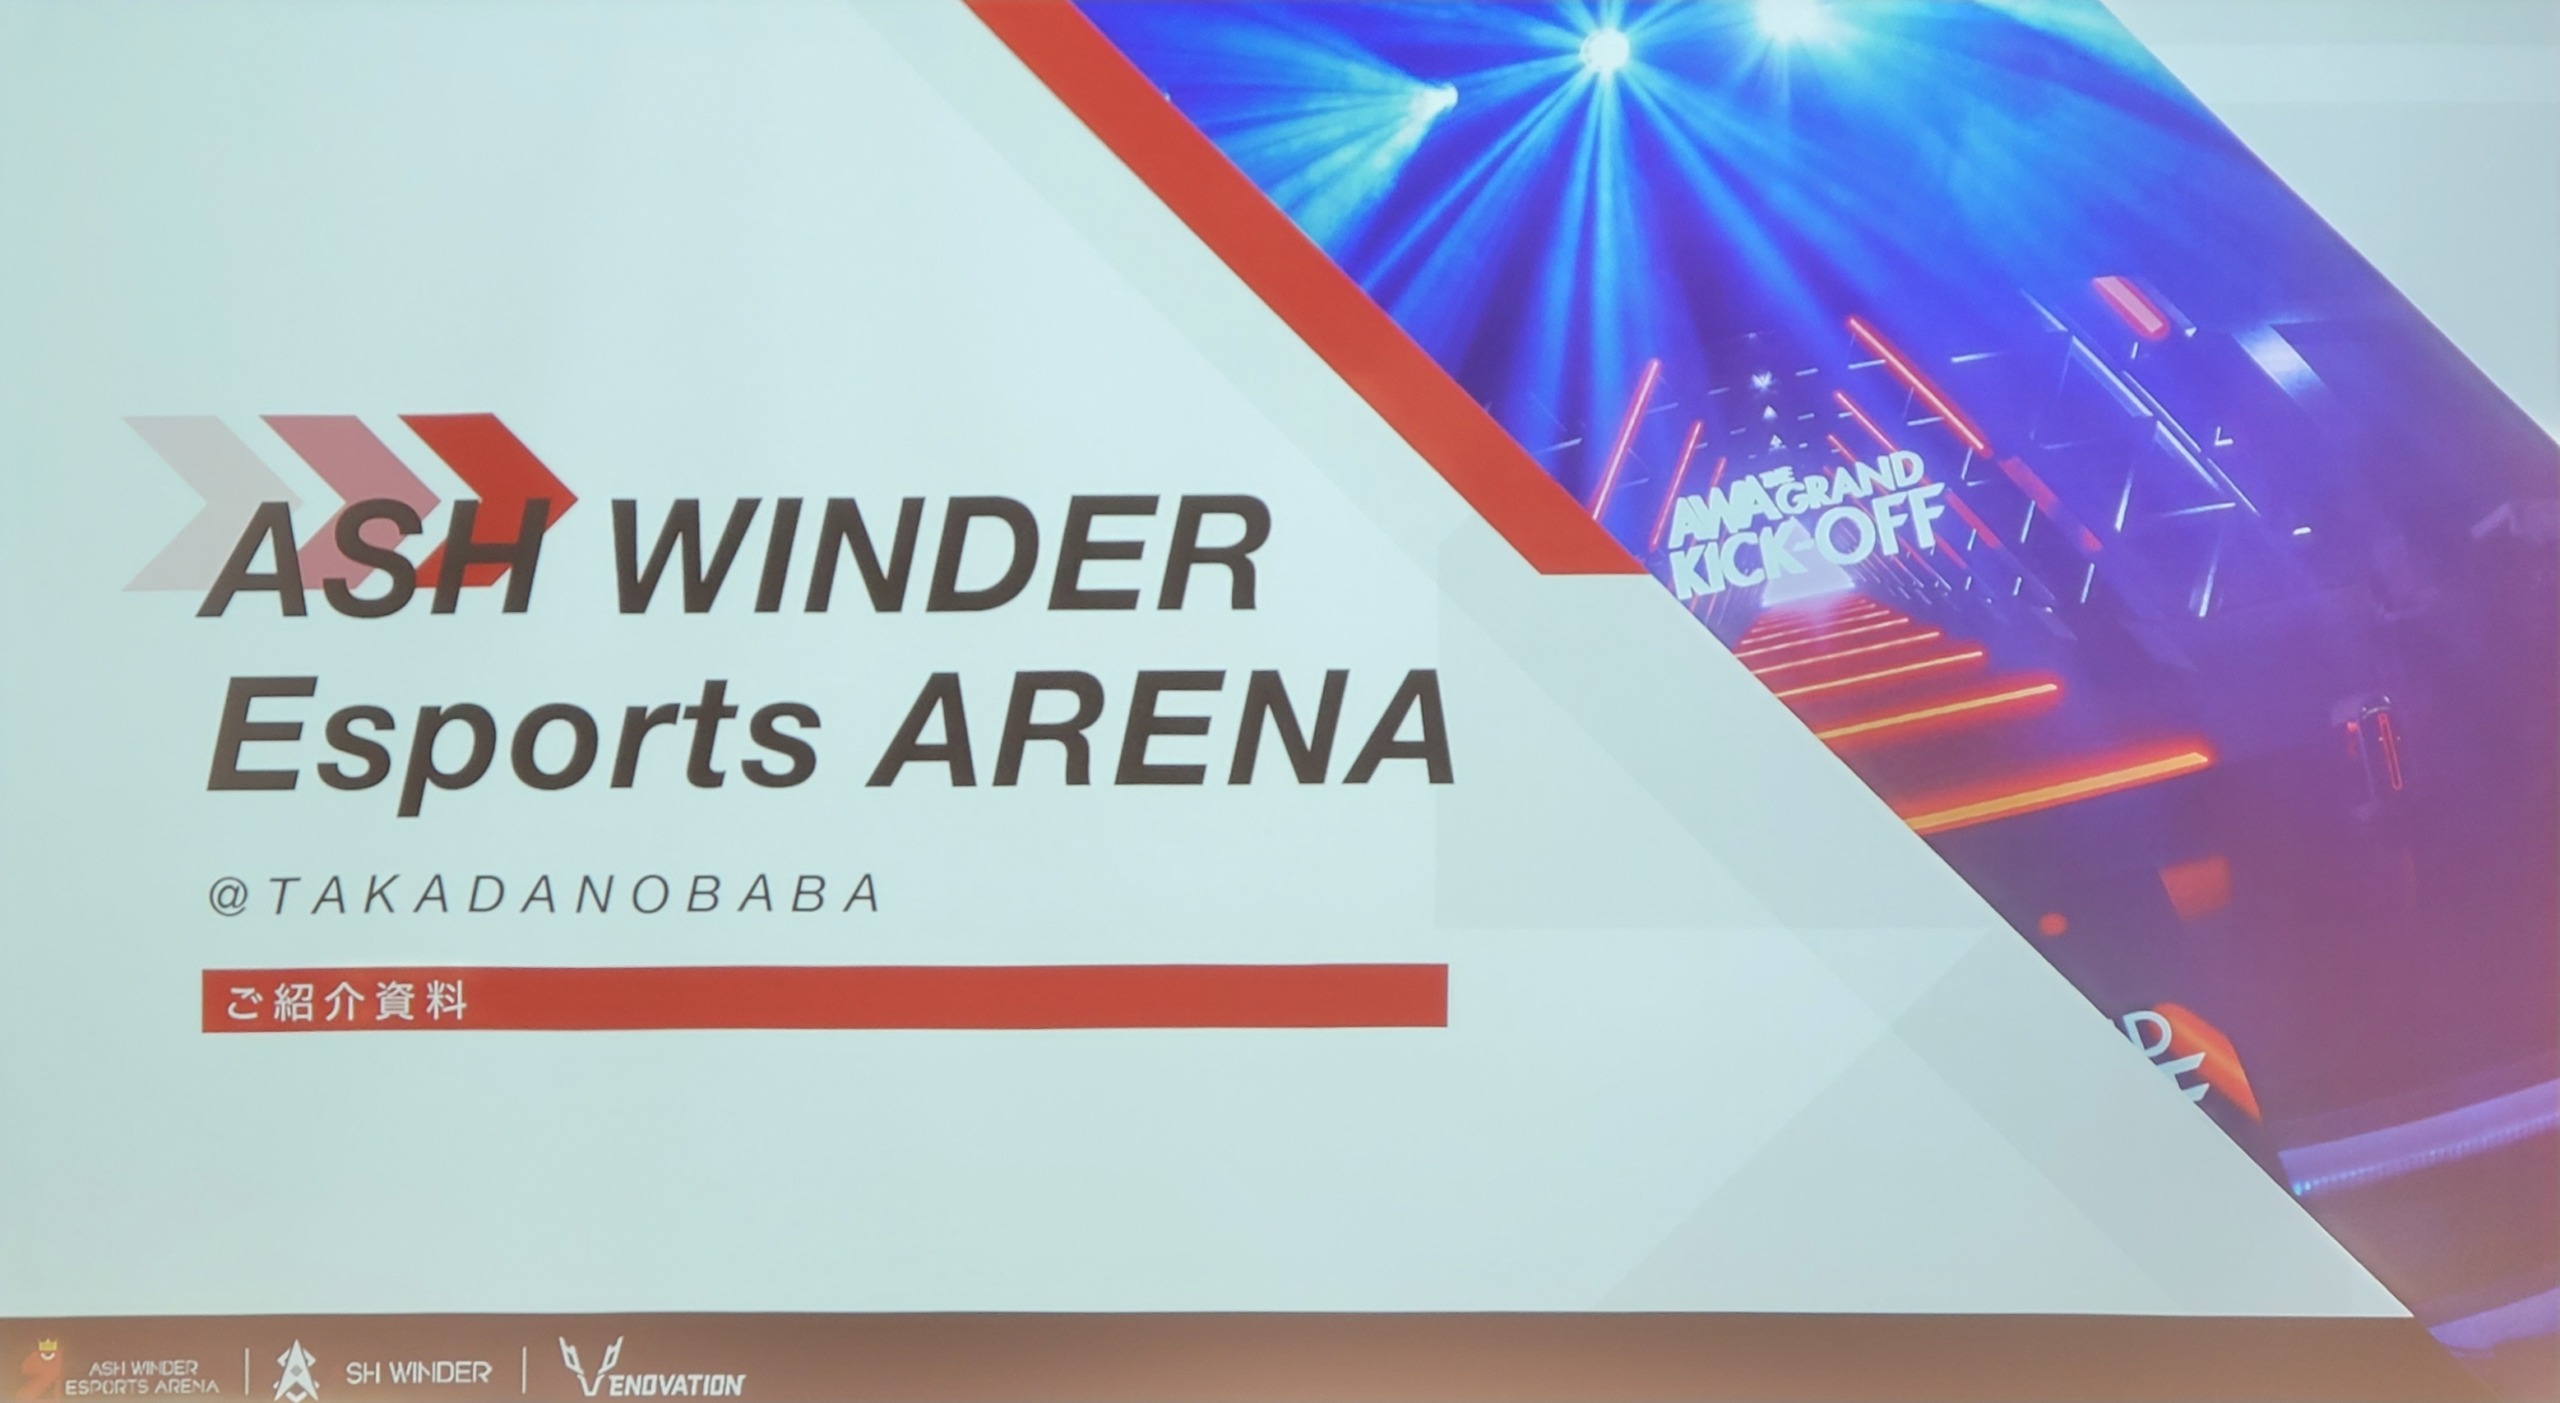 ASH WINDER Esports ARENA 高田馬場店についての説明資料